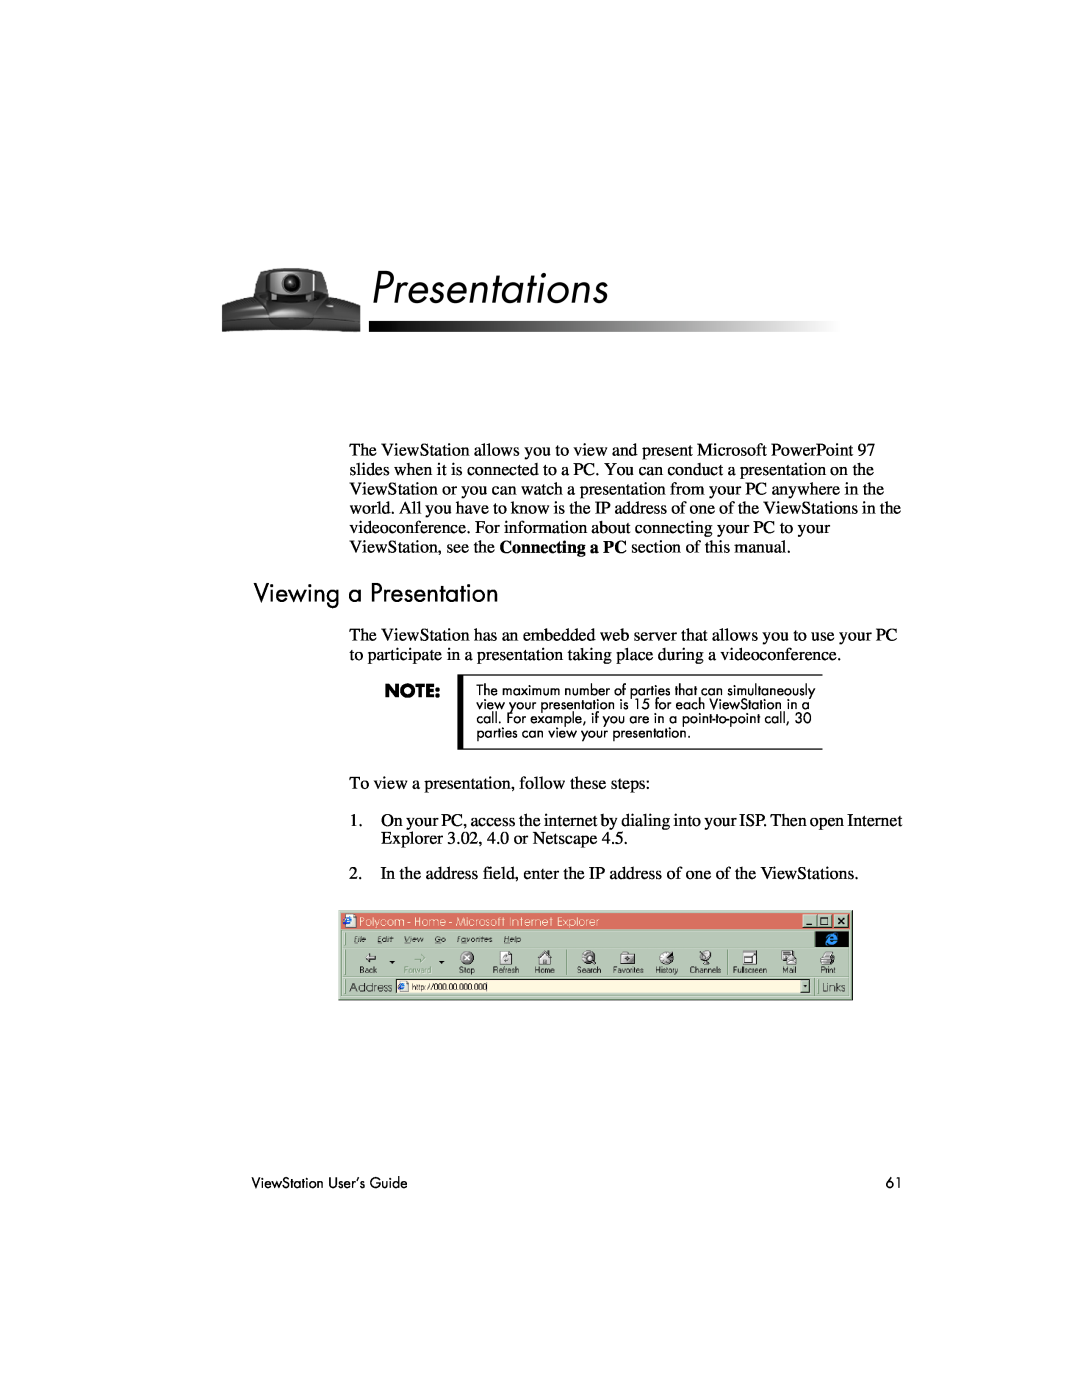 Polycom 512, 128, MP manual Presentations, Viewing a Presentation 